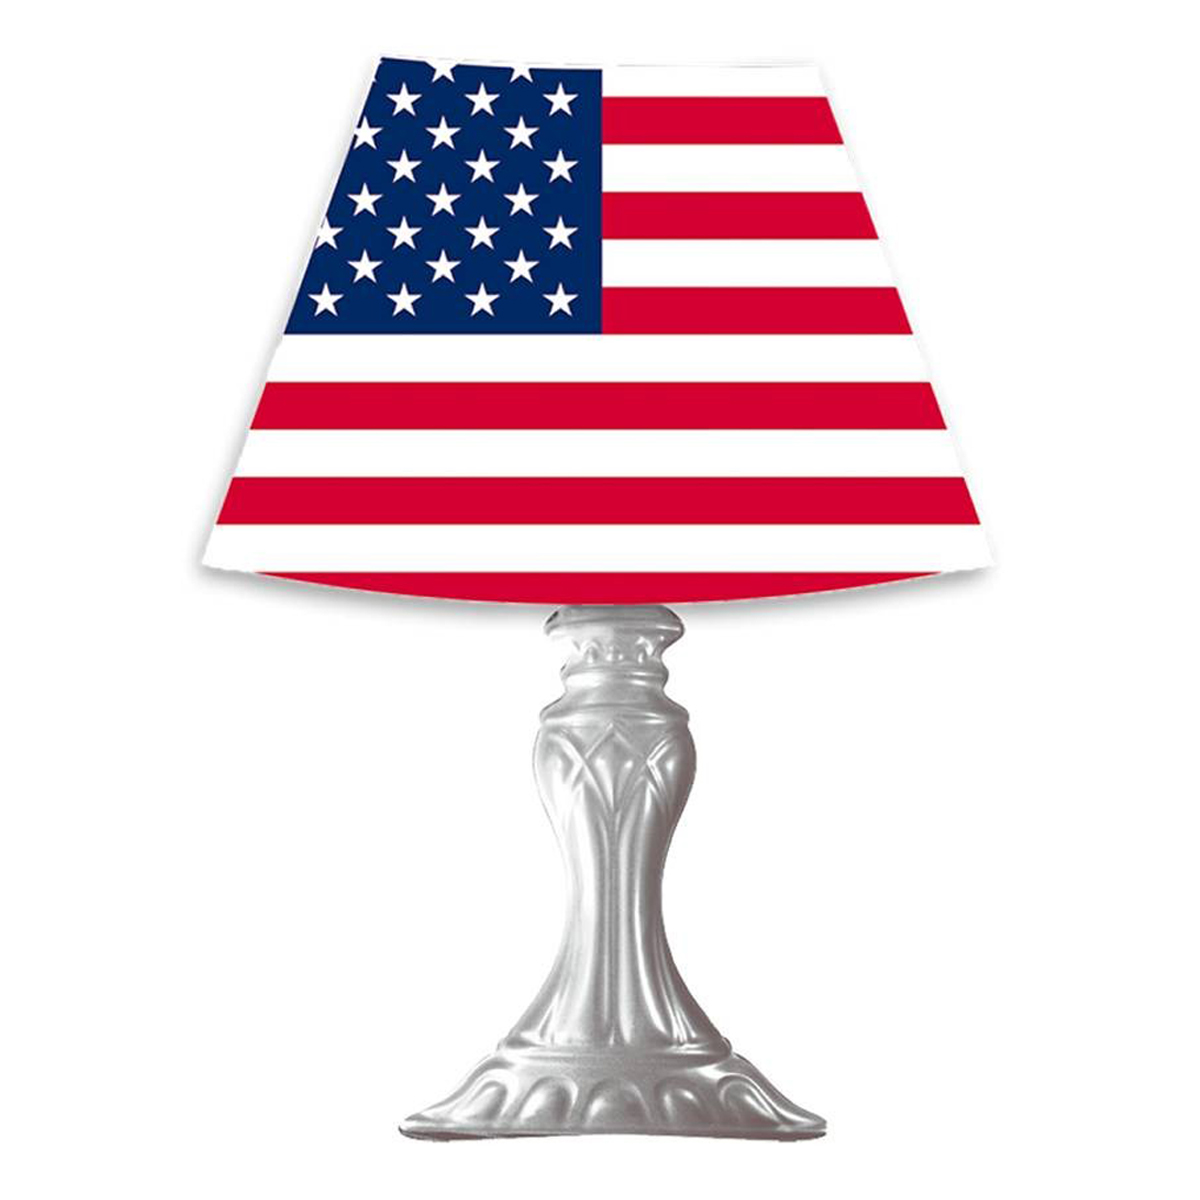 Sticker lumineux \'Lampe\' blanc multicolore (America) - [N4228]